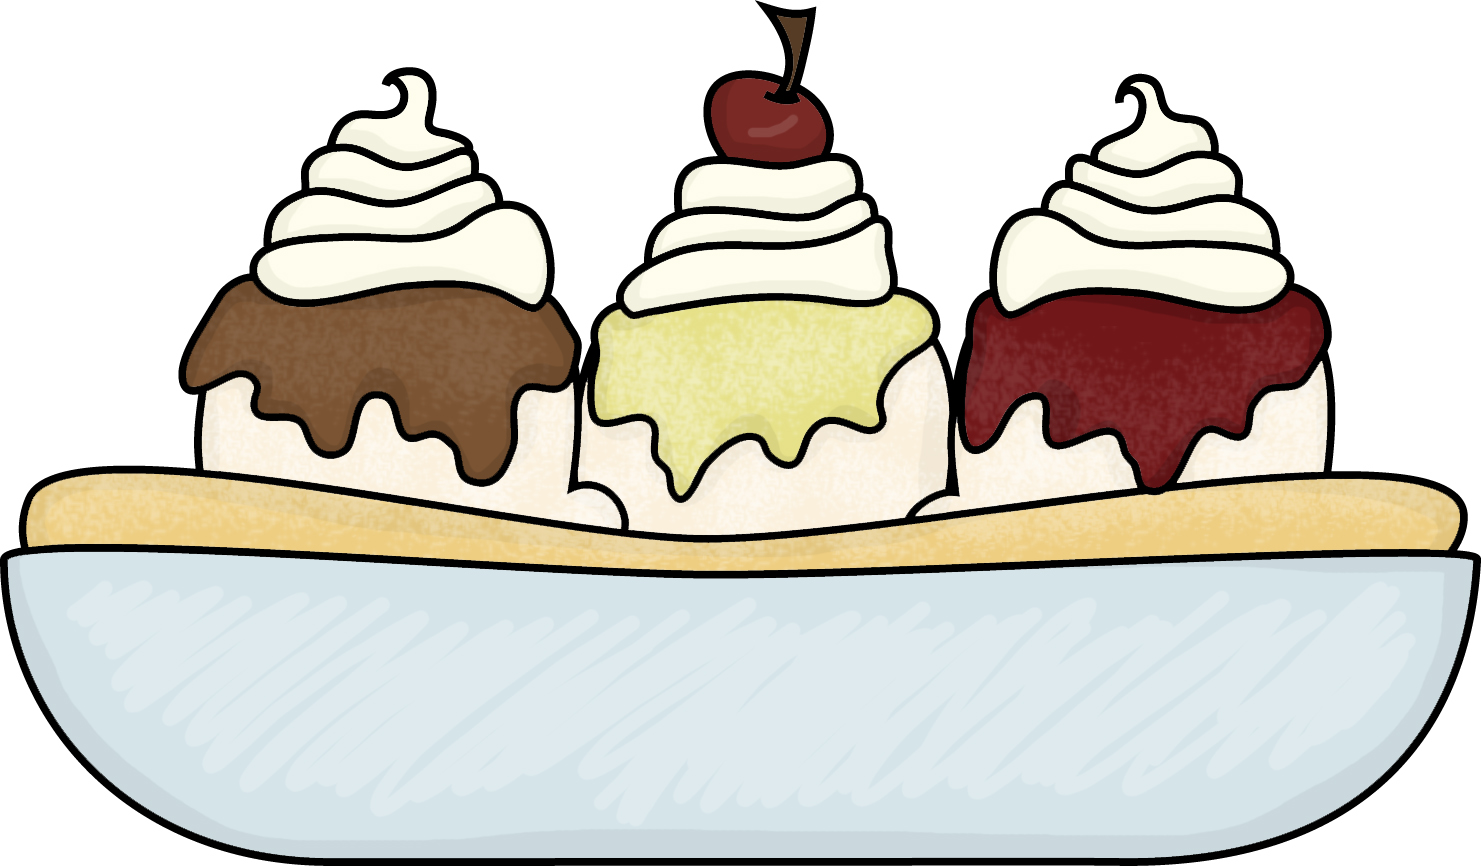 clipart ice cream scoop - photo #46